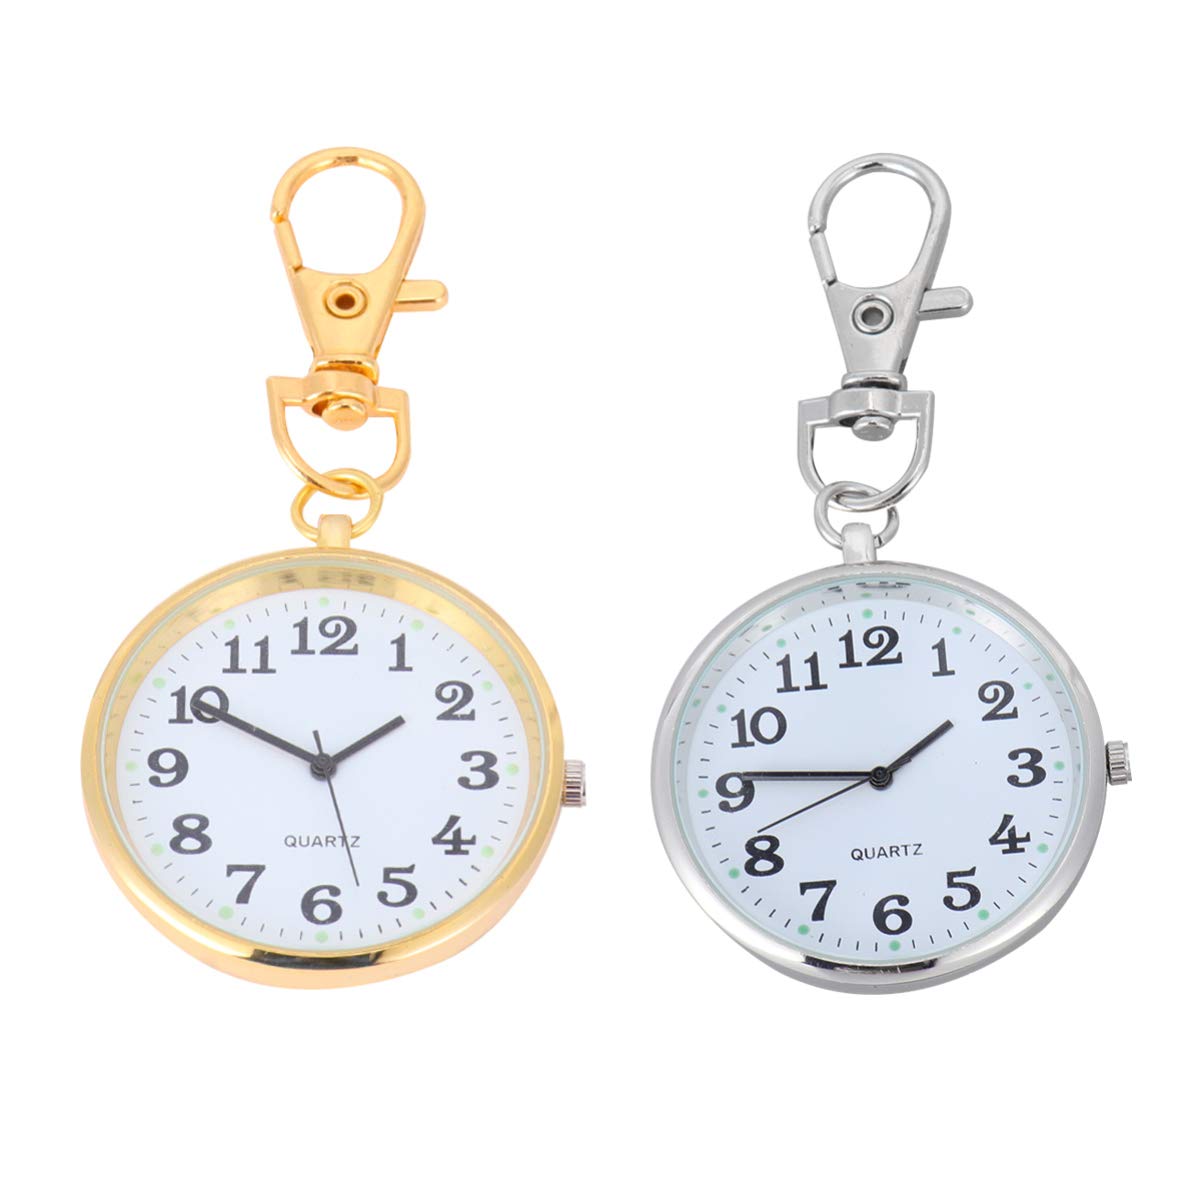 NICERIO 2pcs, Nurse Pocket Watch Keychain - Vintage Round Classical Pocket Key Chain Watch Pendant Pocket Watch for Nurse Doctor